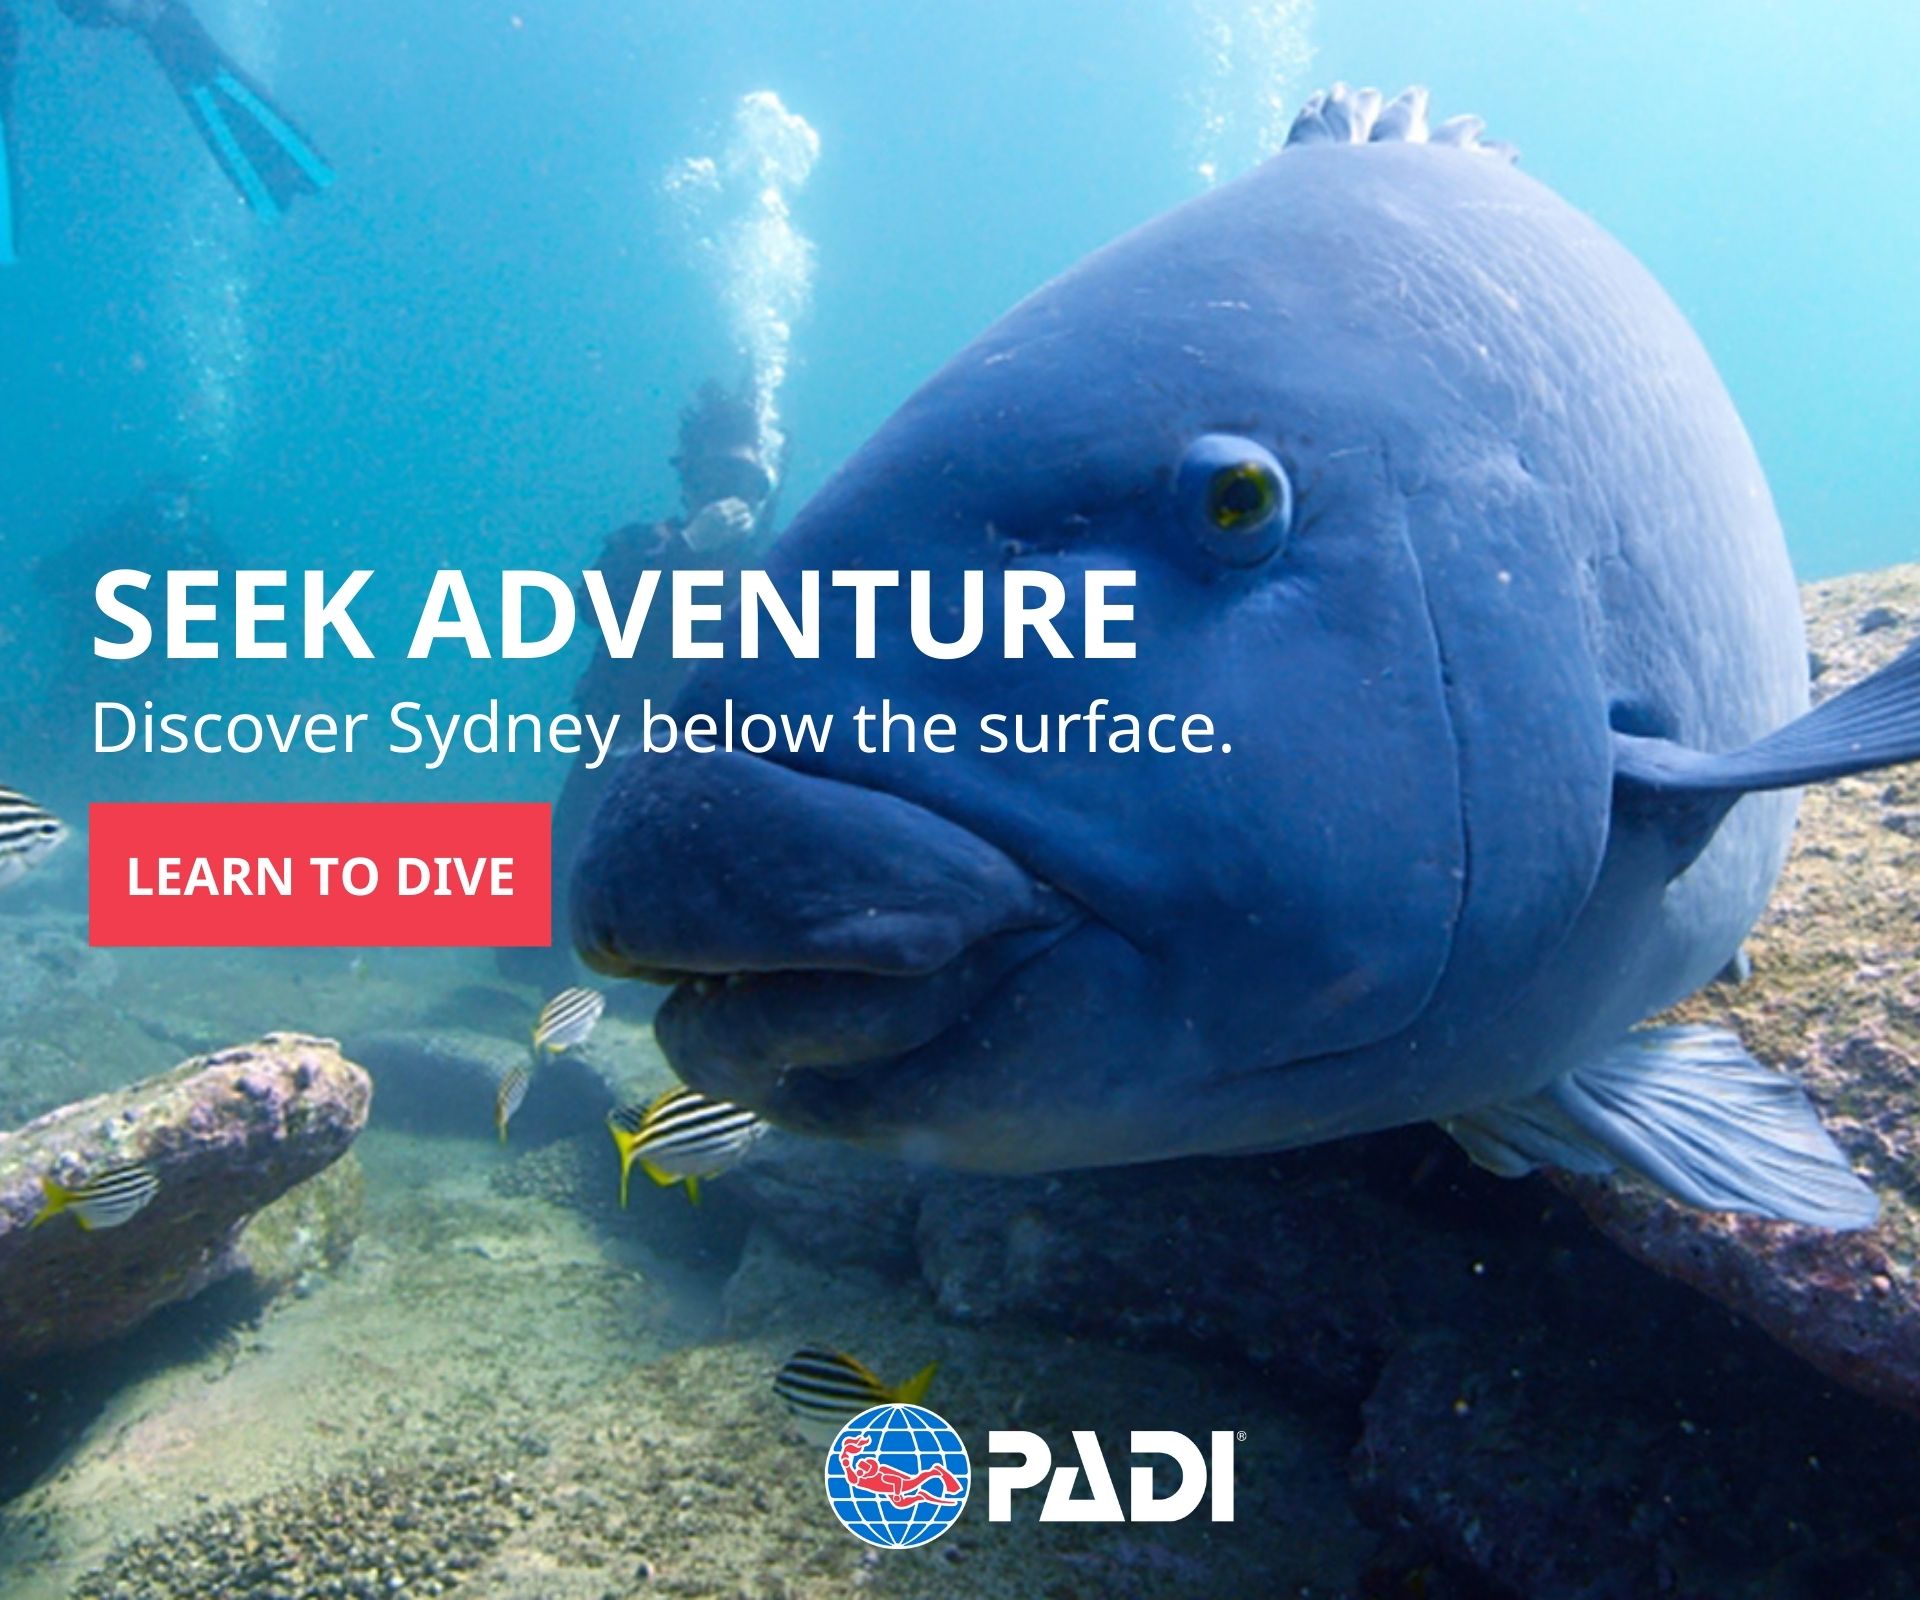 Seek Adventure in Sydney